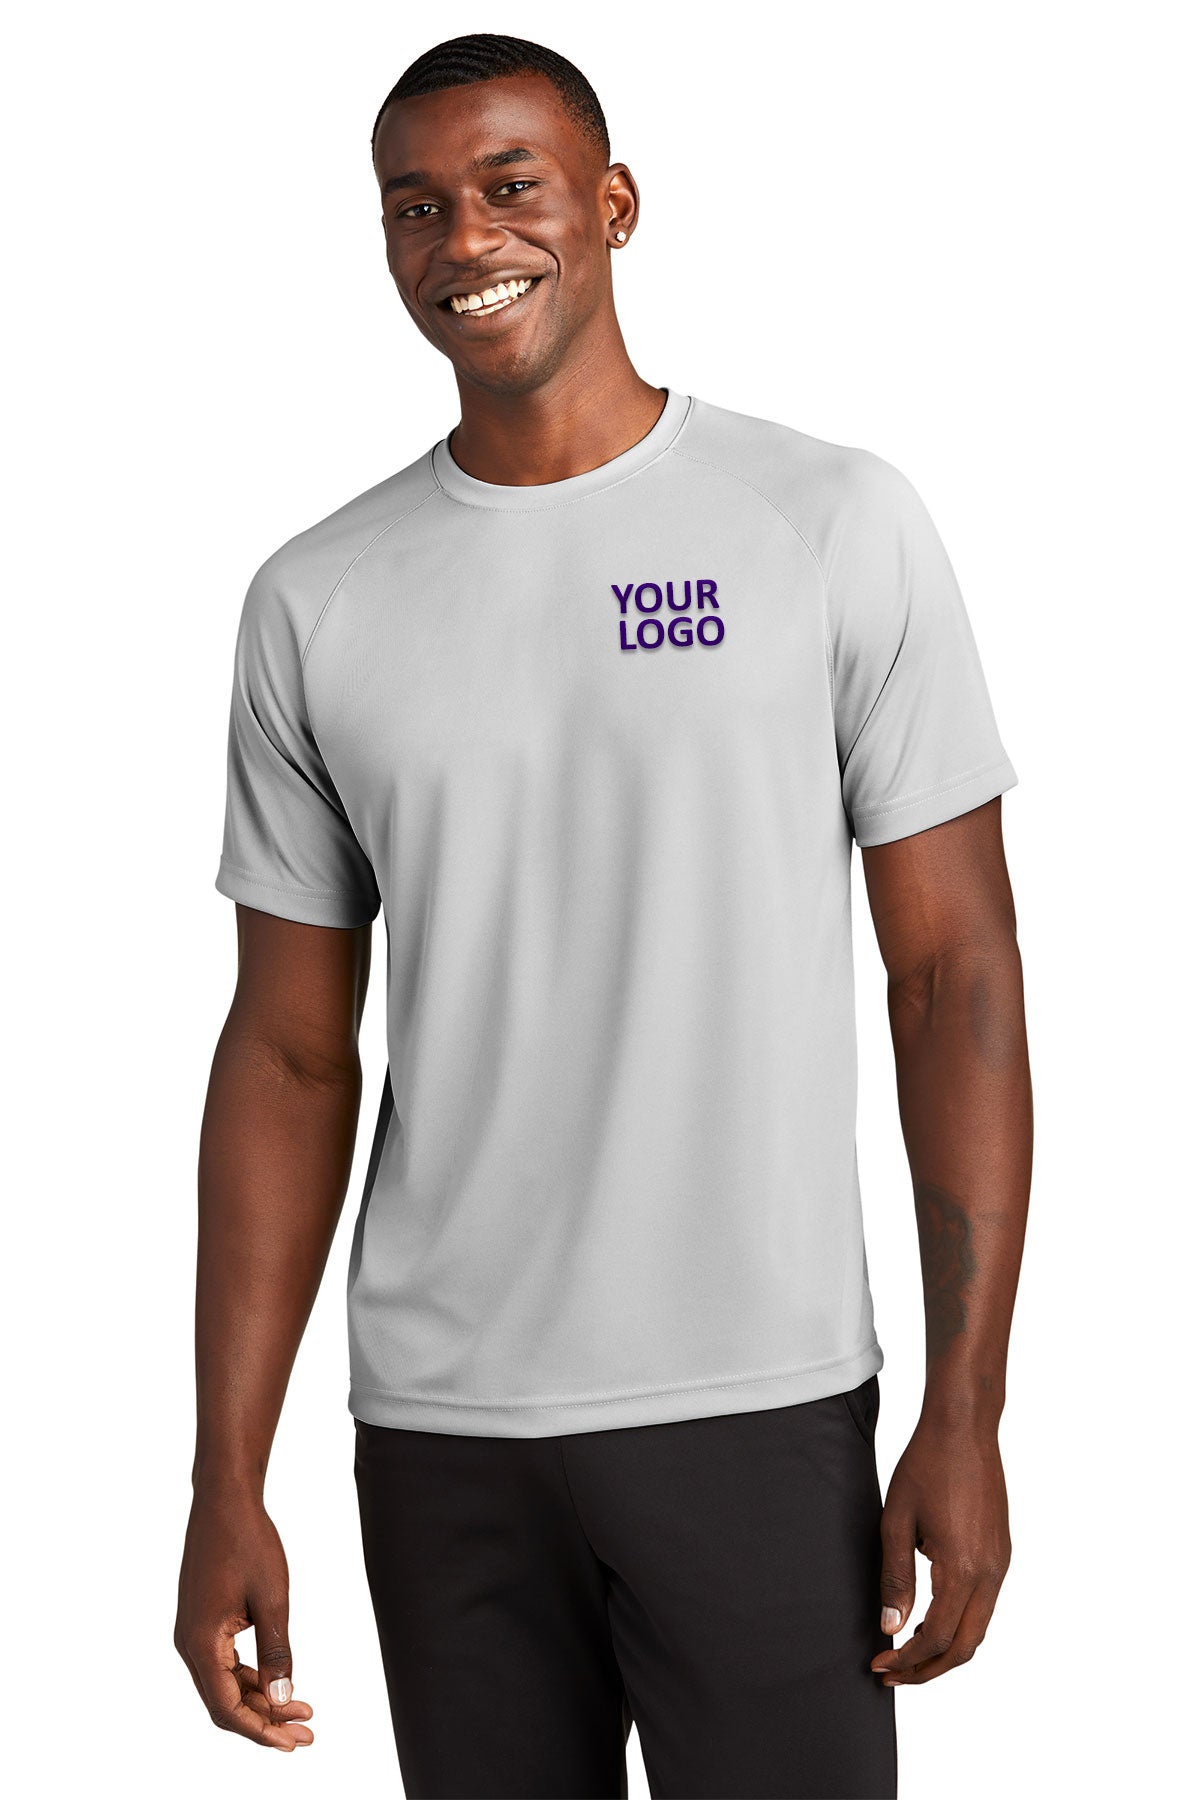 Sport-Tek Dry Zone Short Sleeve Customized Raglan T-Shirts, Silver